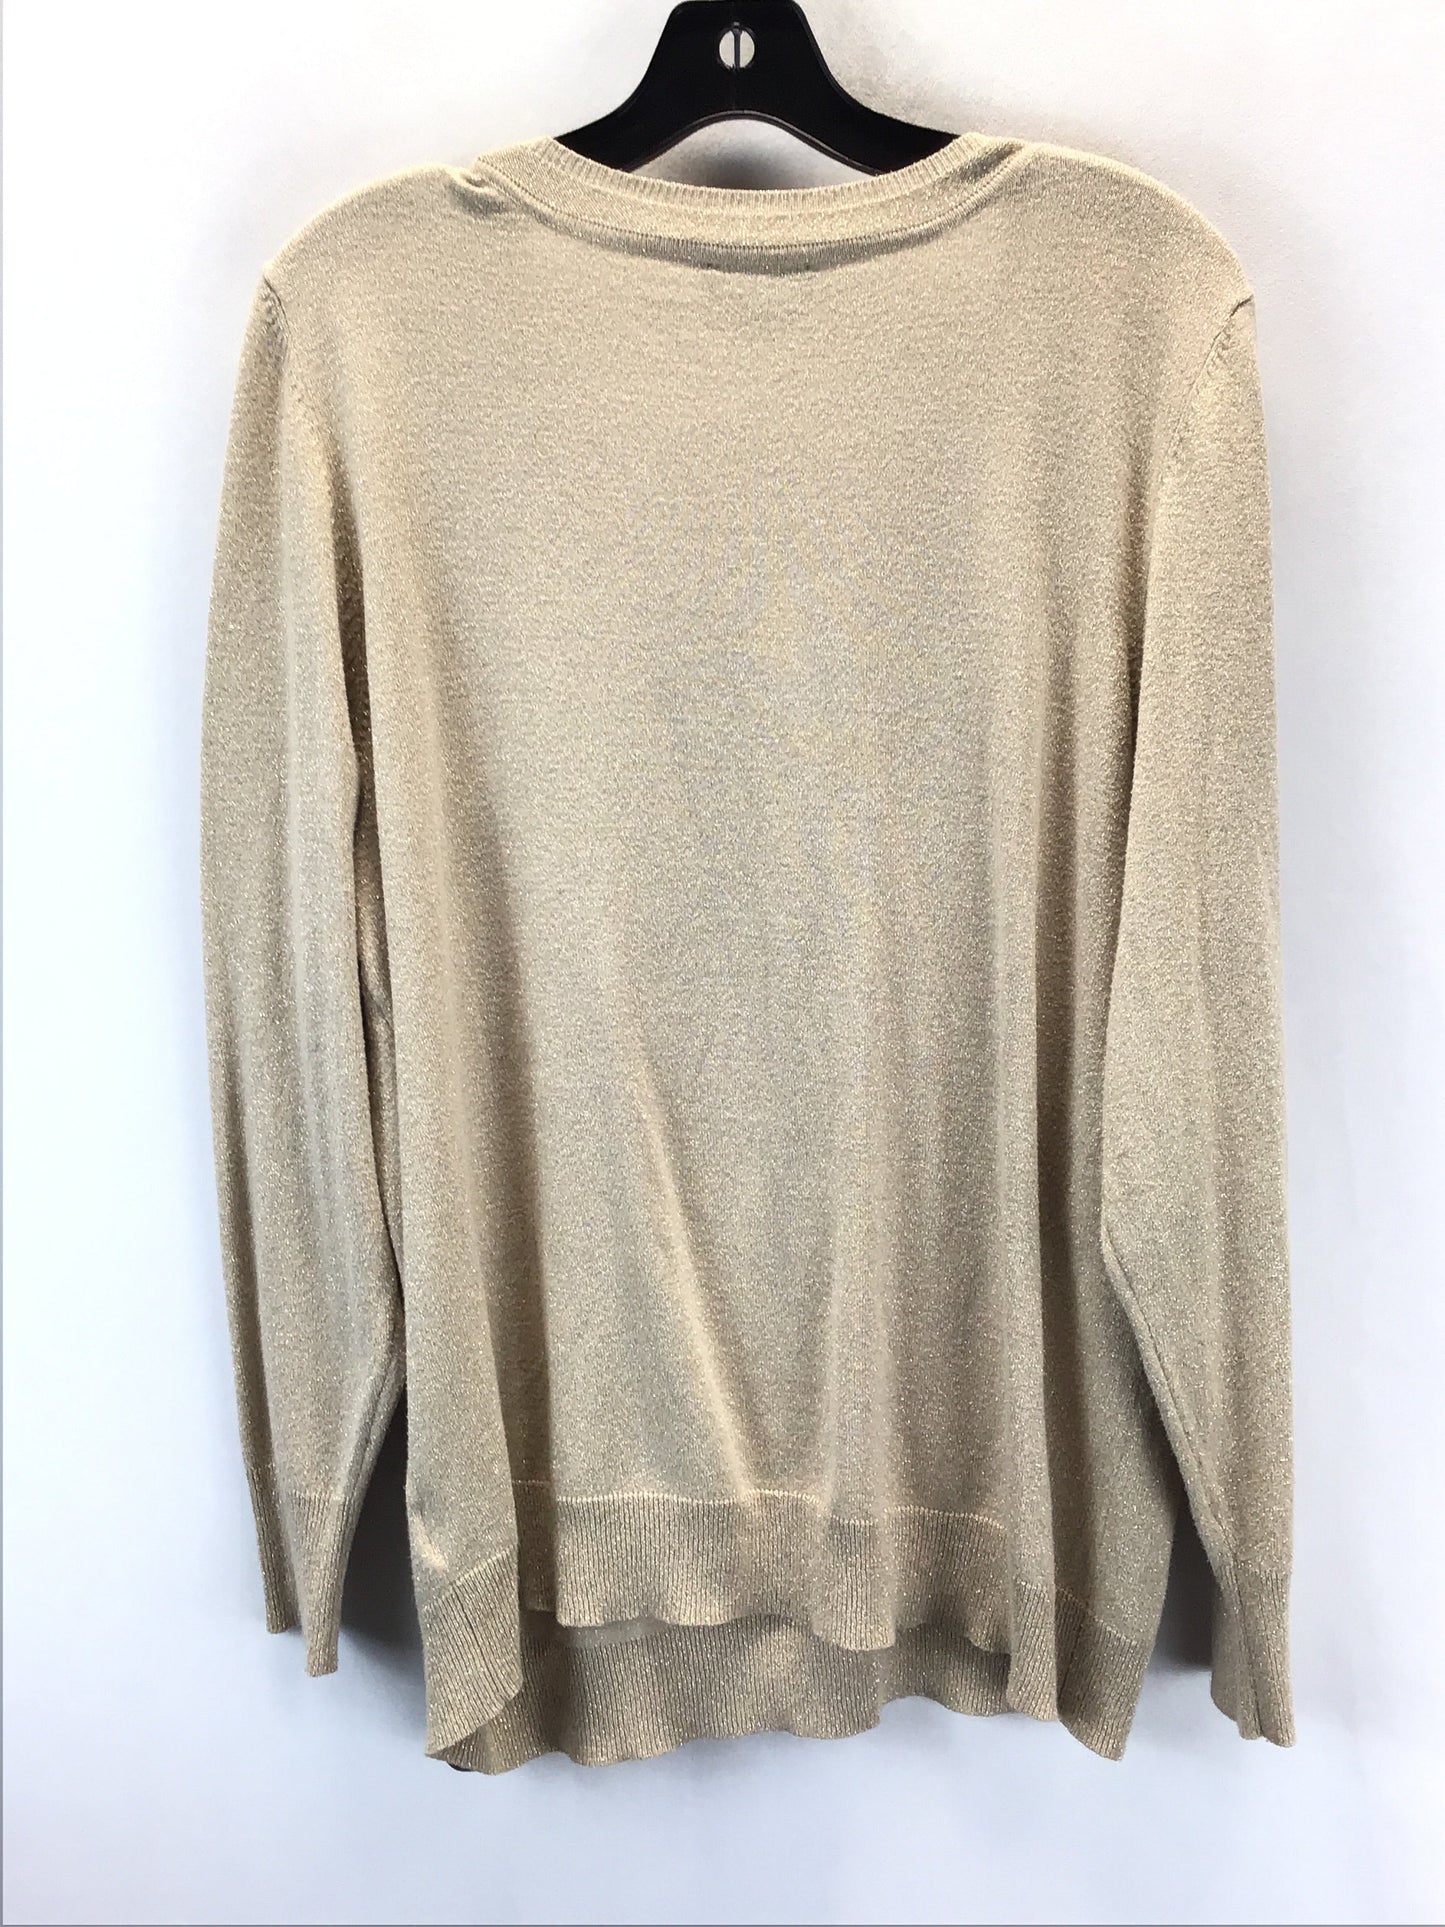 Sweater By Worthington  Size: 2x